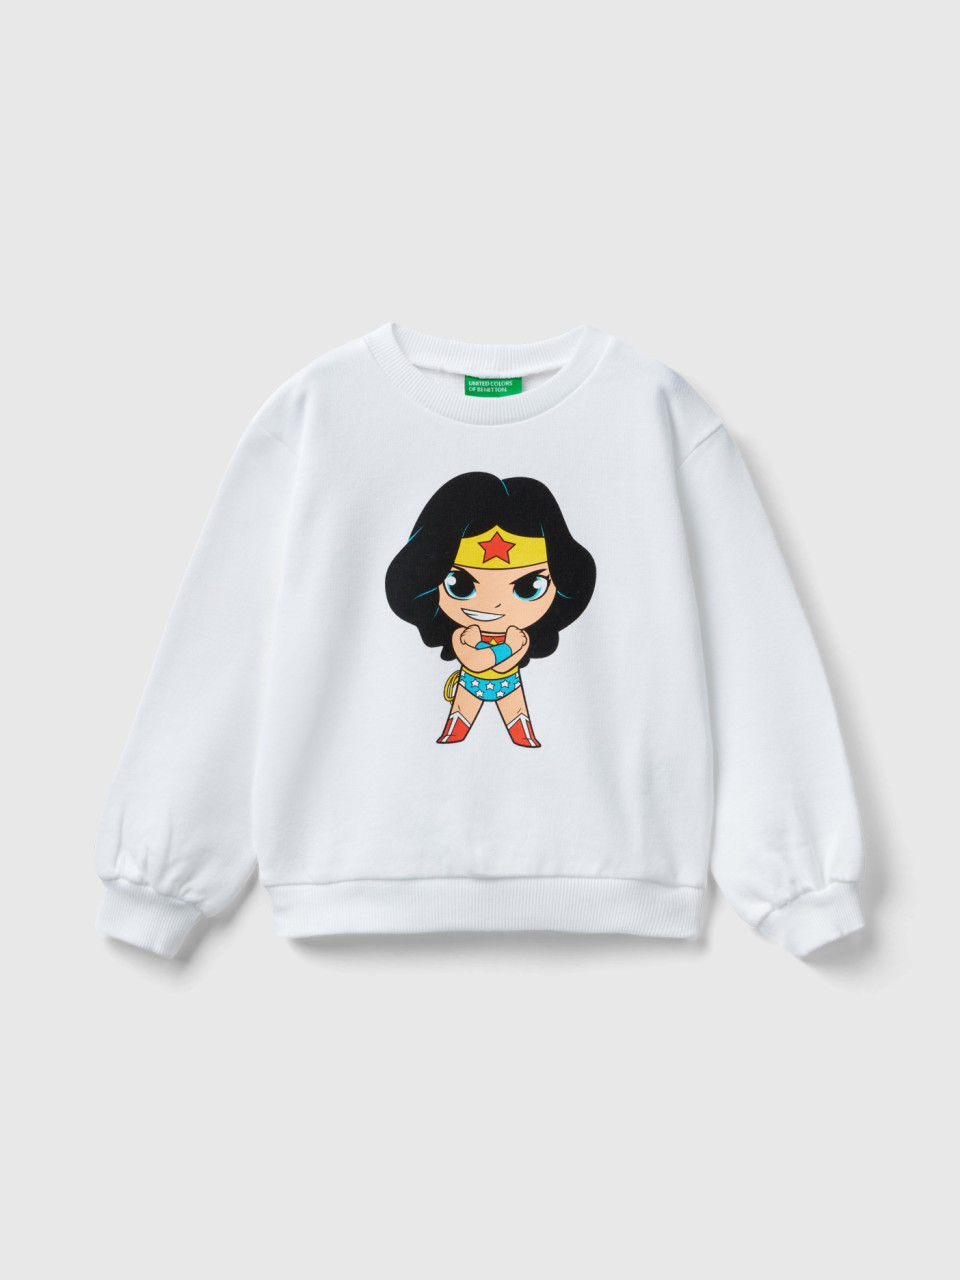 Benetton, Wonder Woman ©&™ Dc Comics Sweatshirt, White, Kids